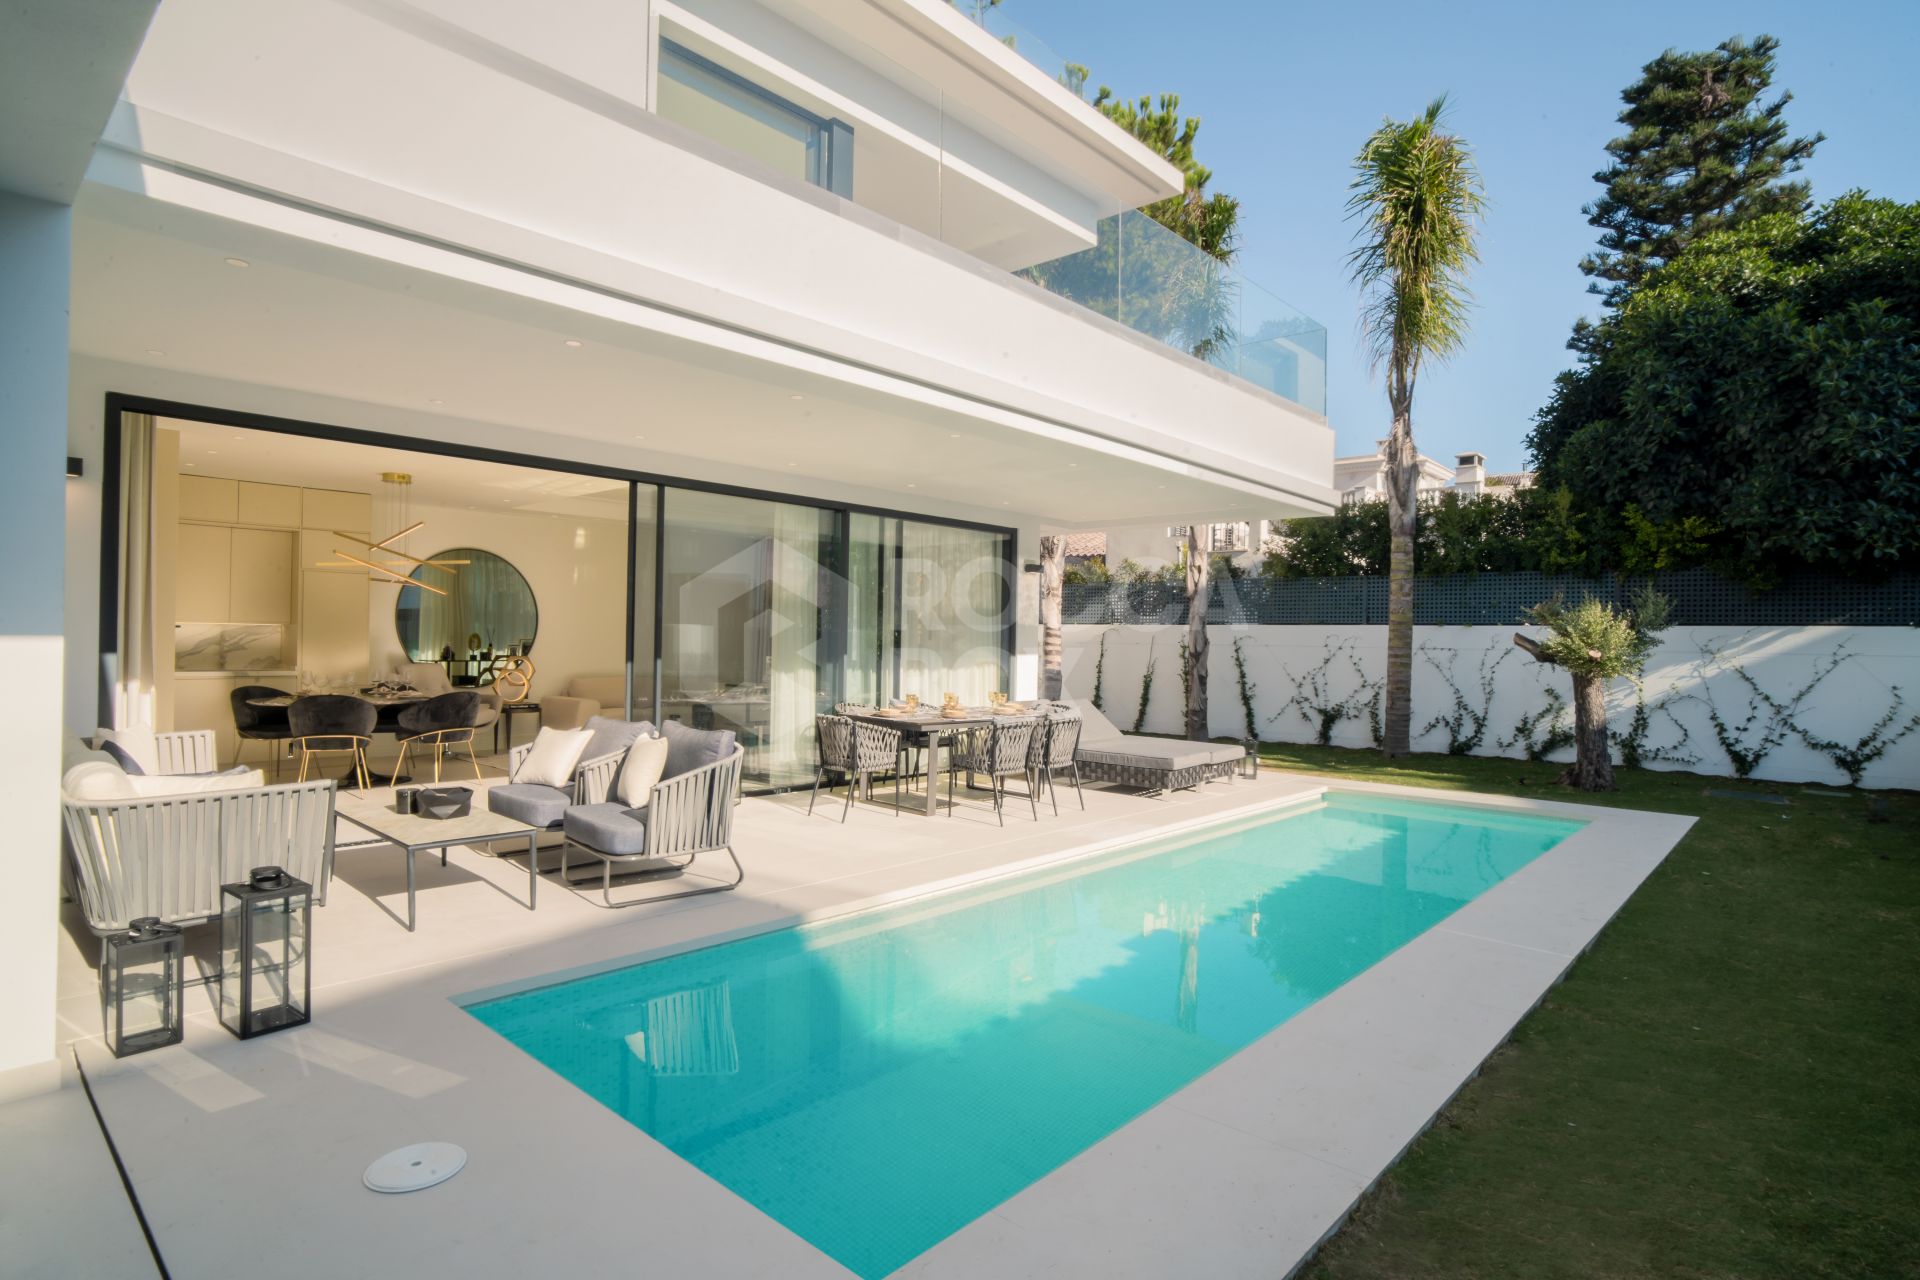 ARFV2139 - New villas for sale in beach location on the Golden Mile in Marbella